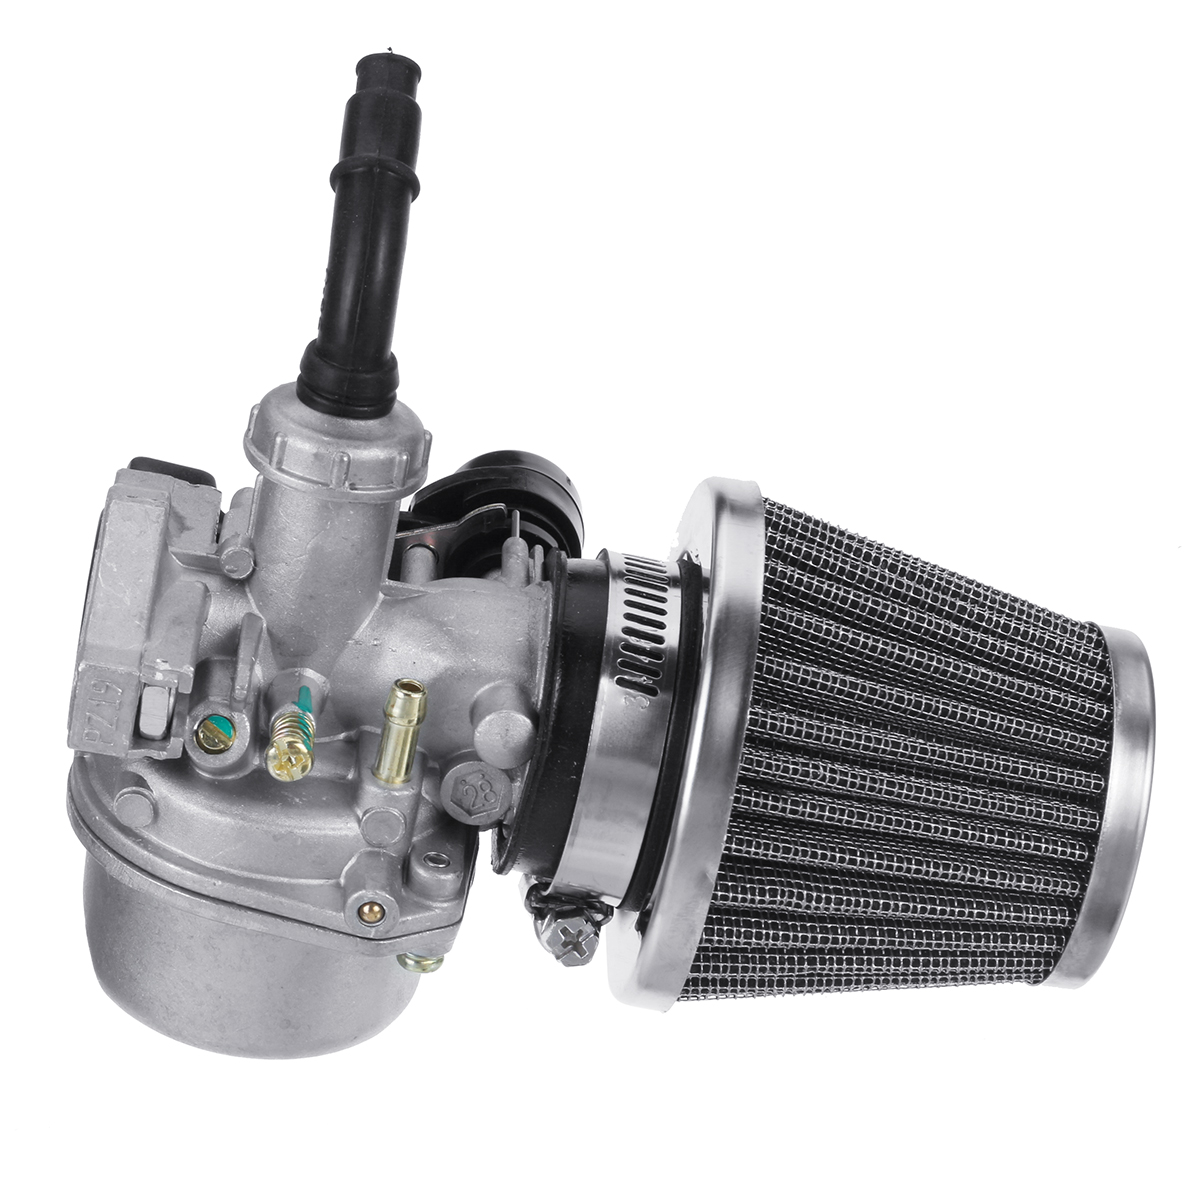 50Cc 70Cc 90Cc 110Cc 125Cc Carb Carburetor with Air Filter Intake Pipe Gasket for Mini Motor ATV Quad